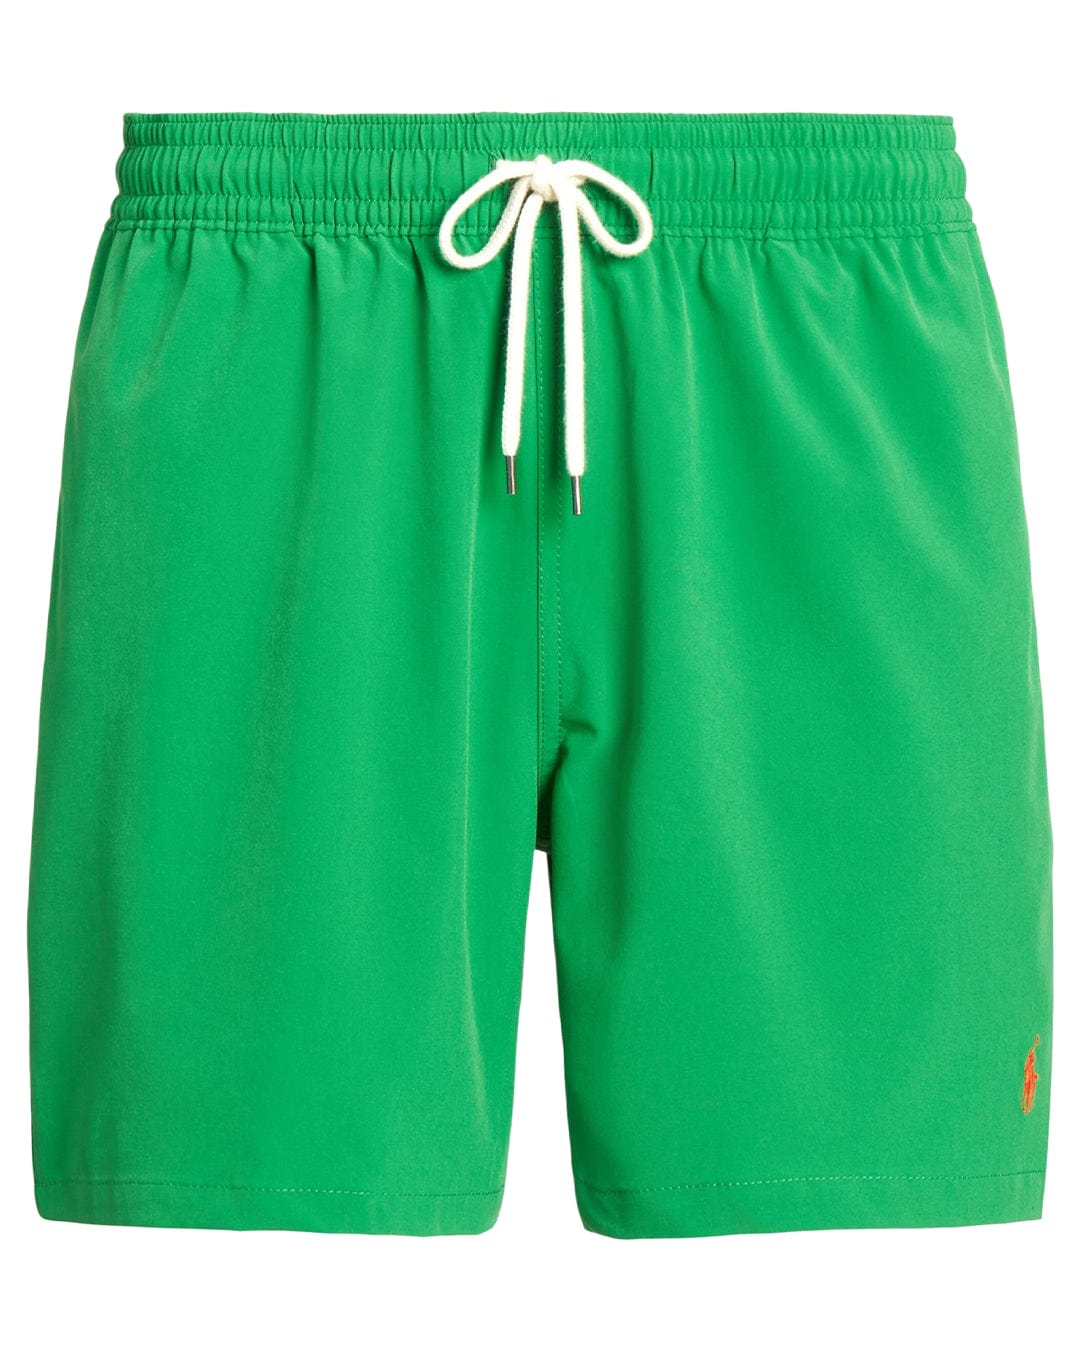 Polo Ralph Lauren Swimwear Polo Ralph Lauren Green Traveler Swim Shorts